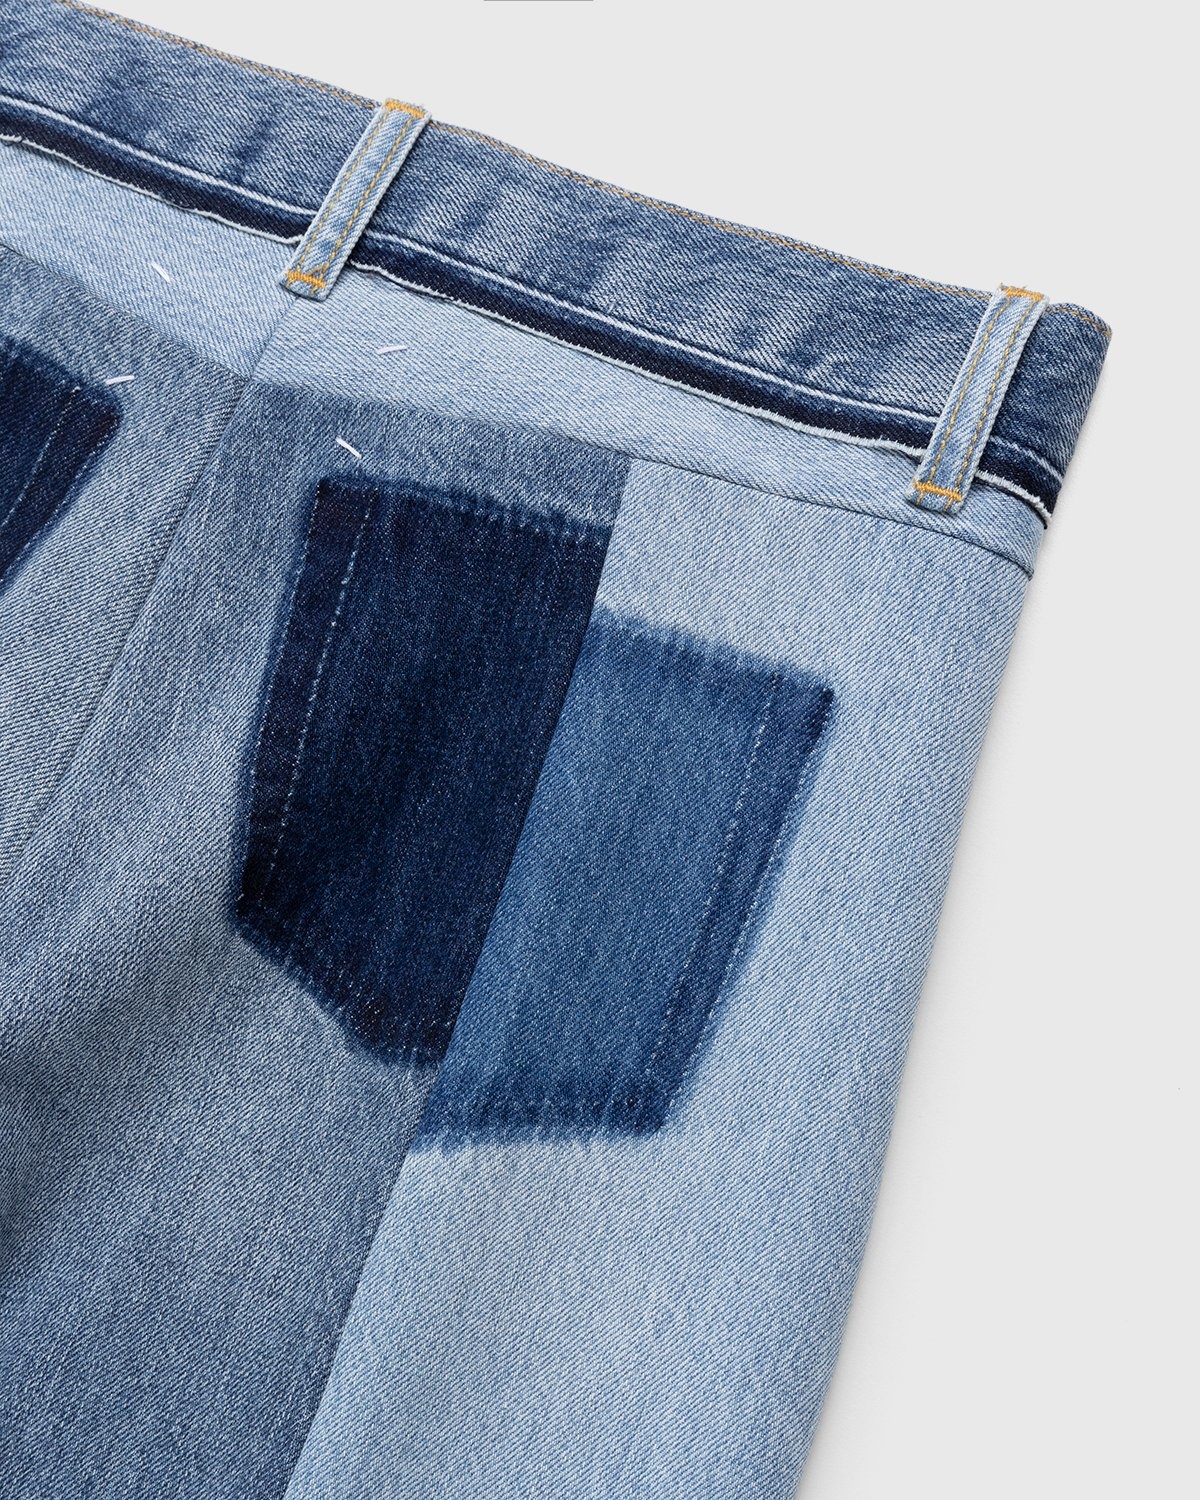 Maison Margiela – Spliced Jeans Blue - Denim - Blue - Image 5